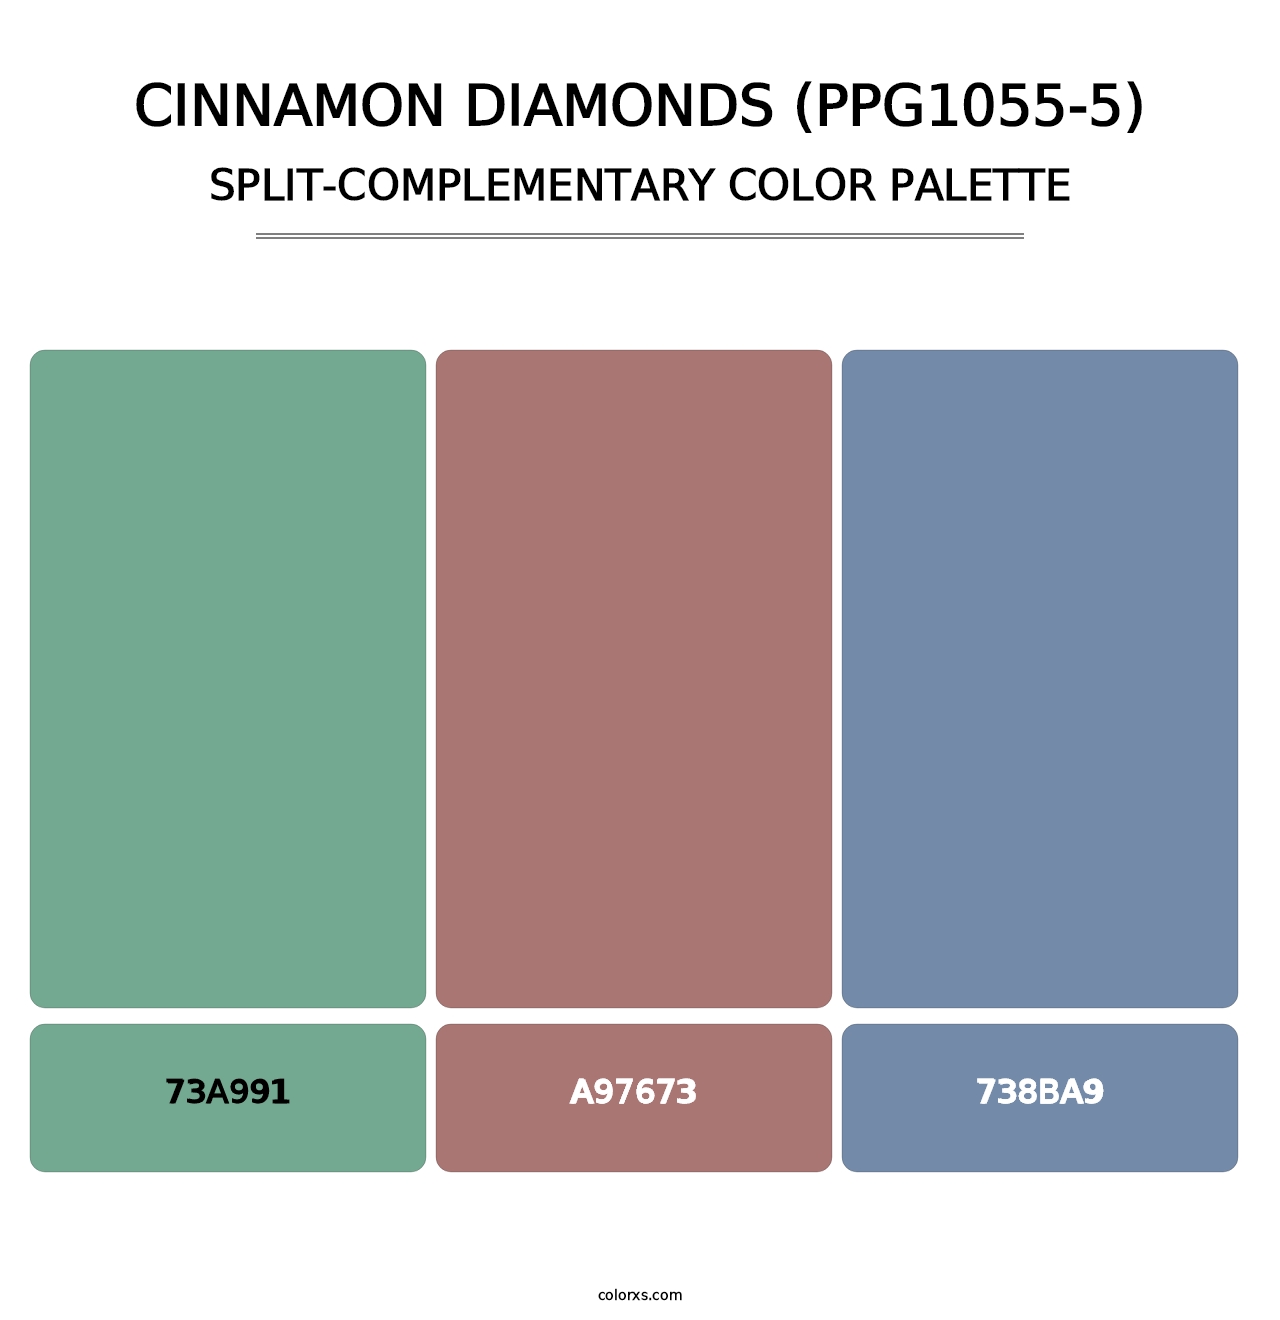 Cinnamon Diamonds (PPG1055-5) - Split-Complementary Color Palette